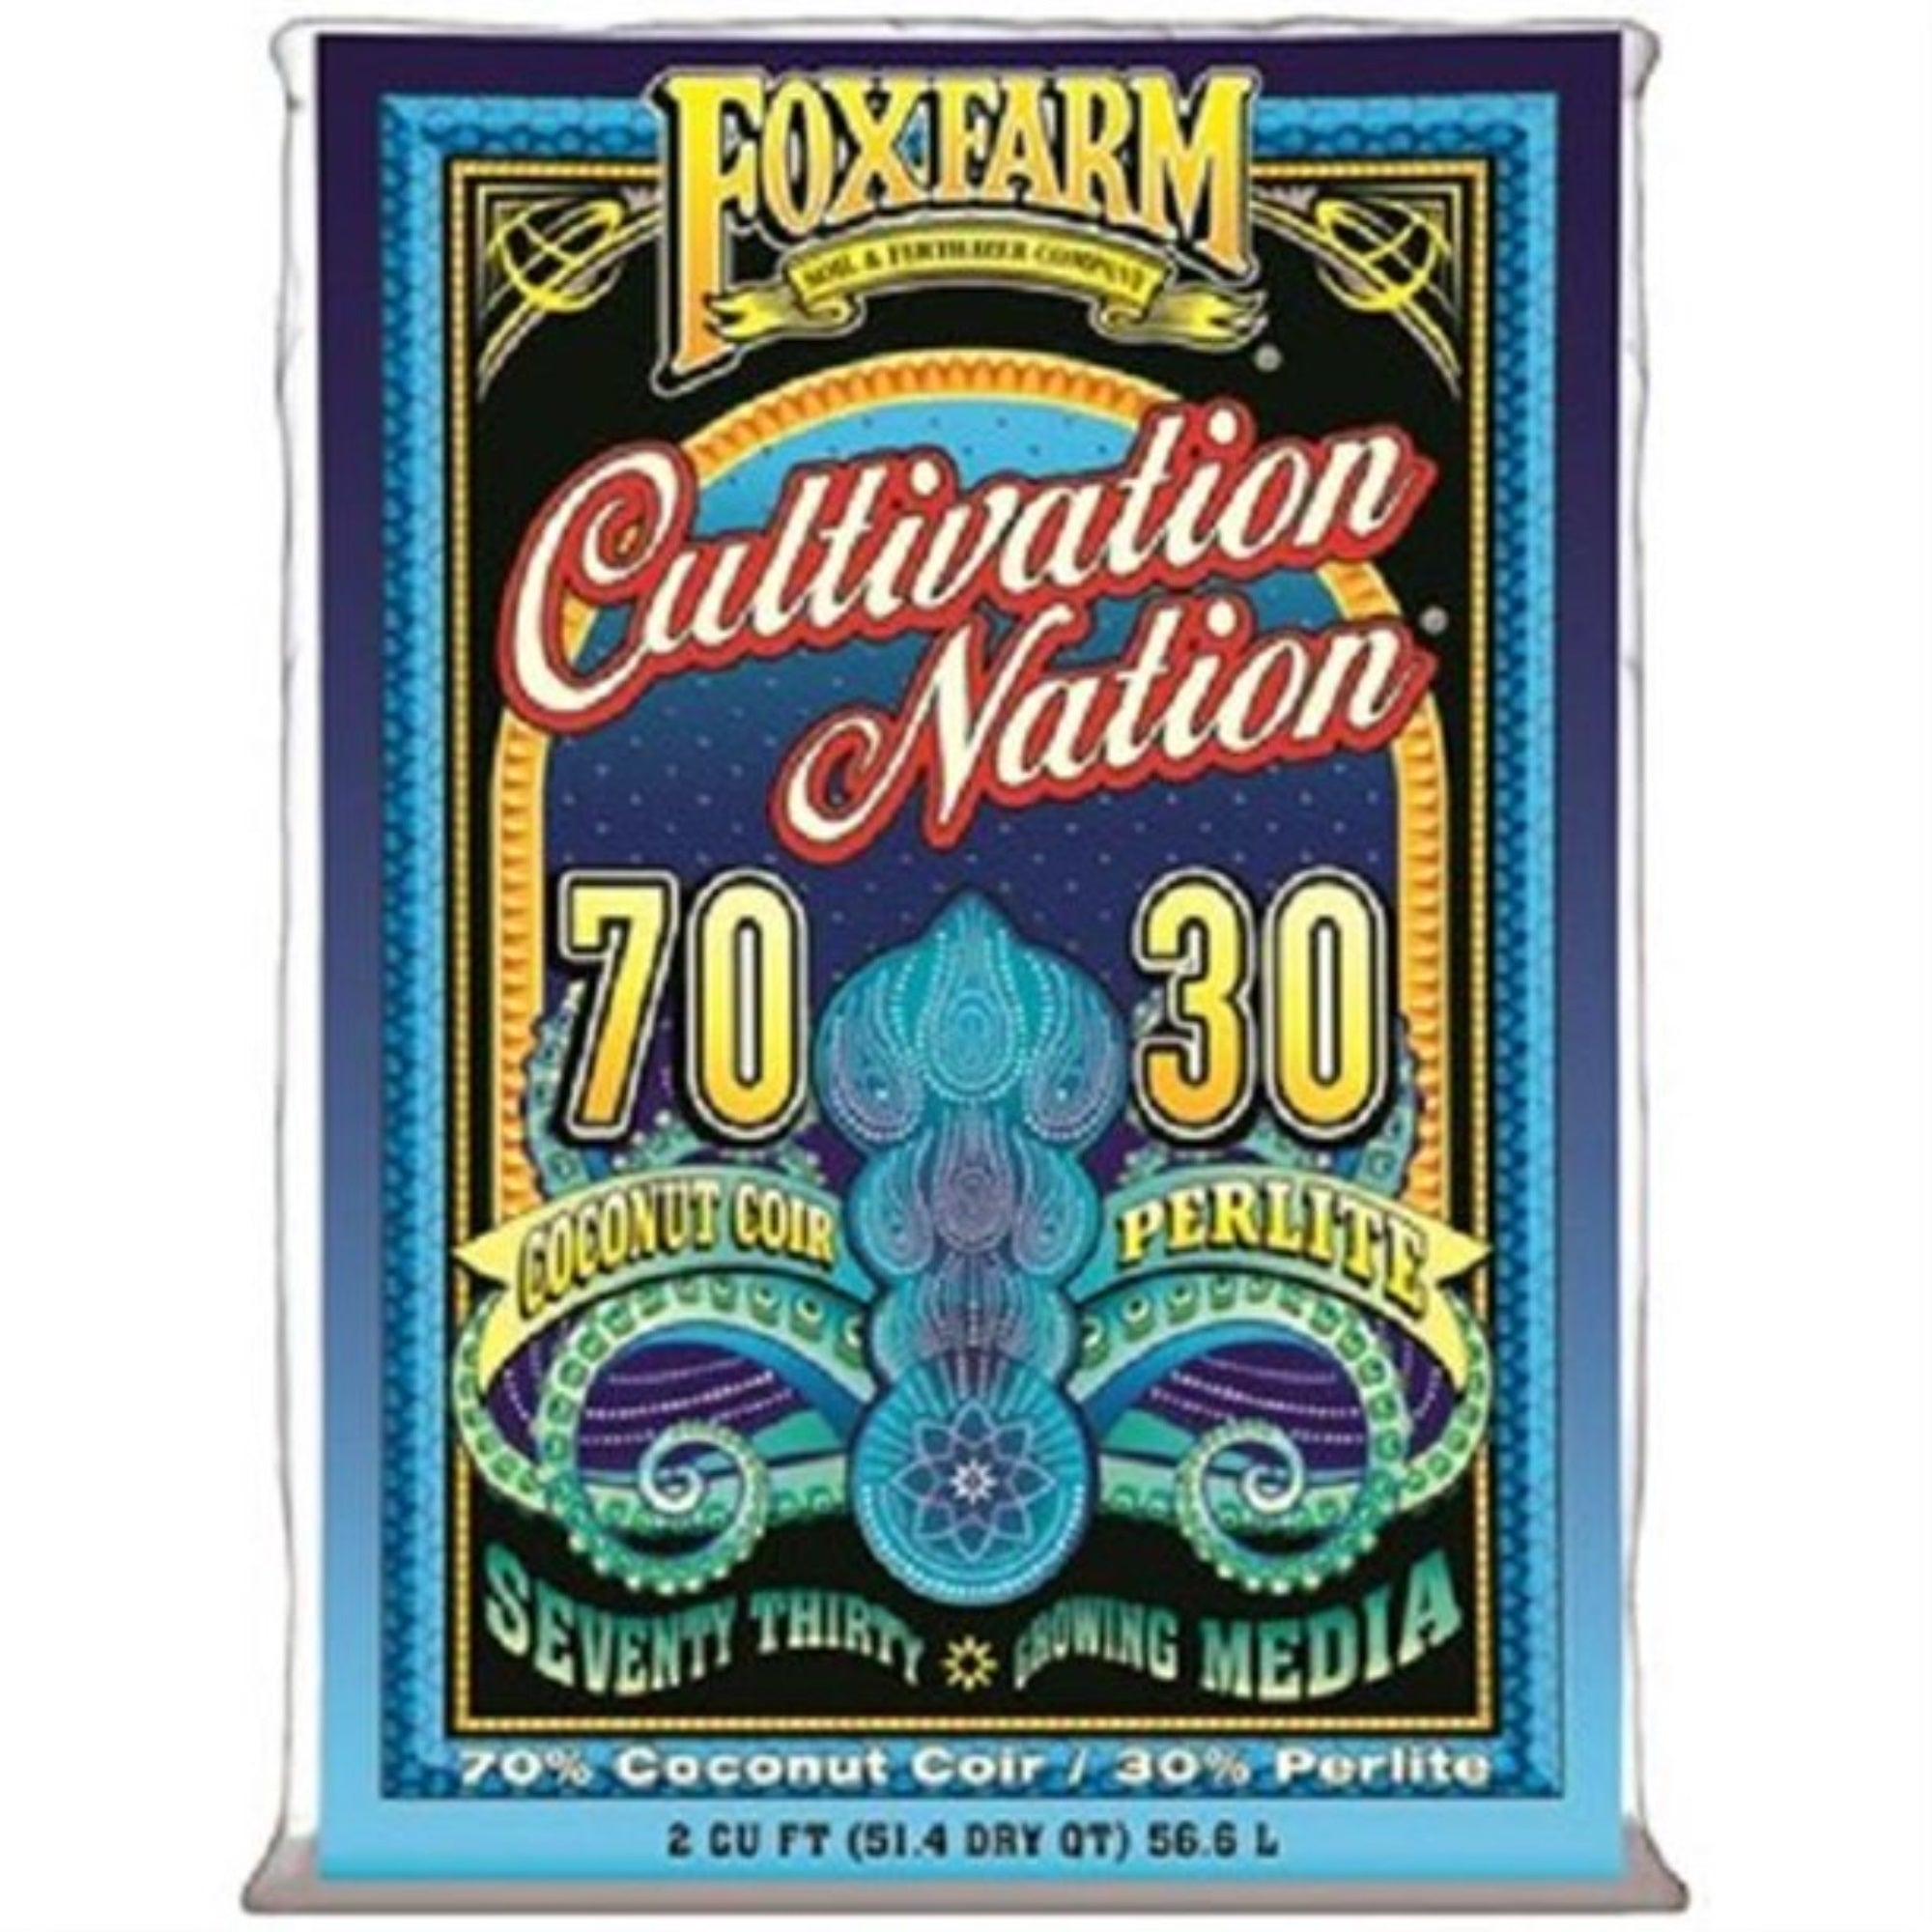 FoxFarm Cultivation Nation 70-30 Coconut Coir and Perlite, Blue, 2 CF